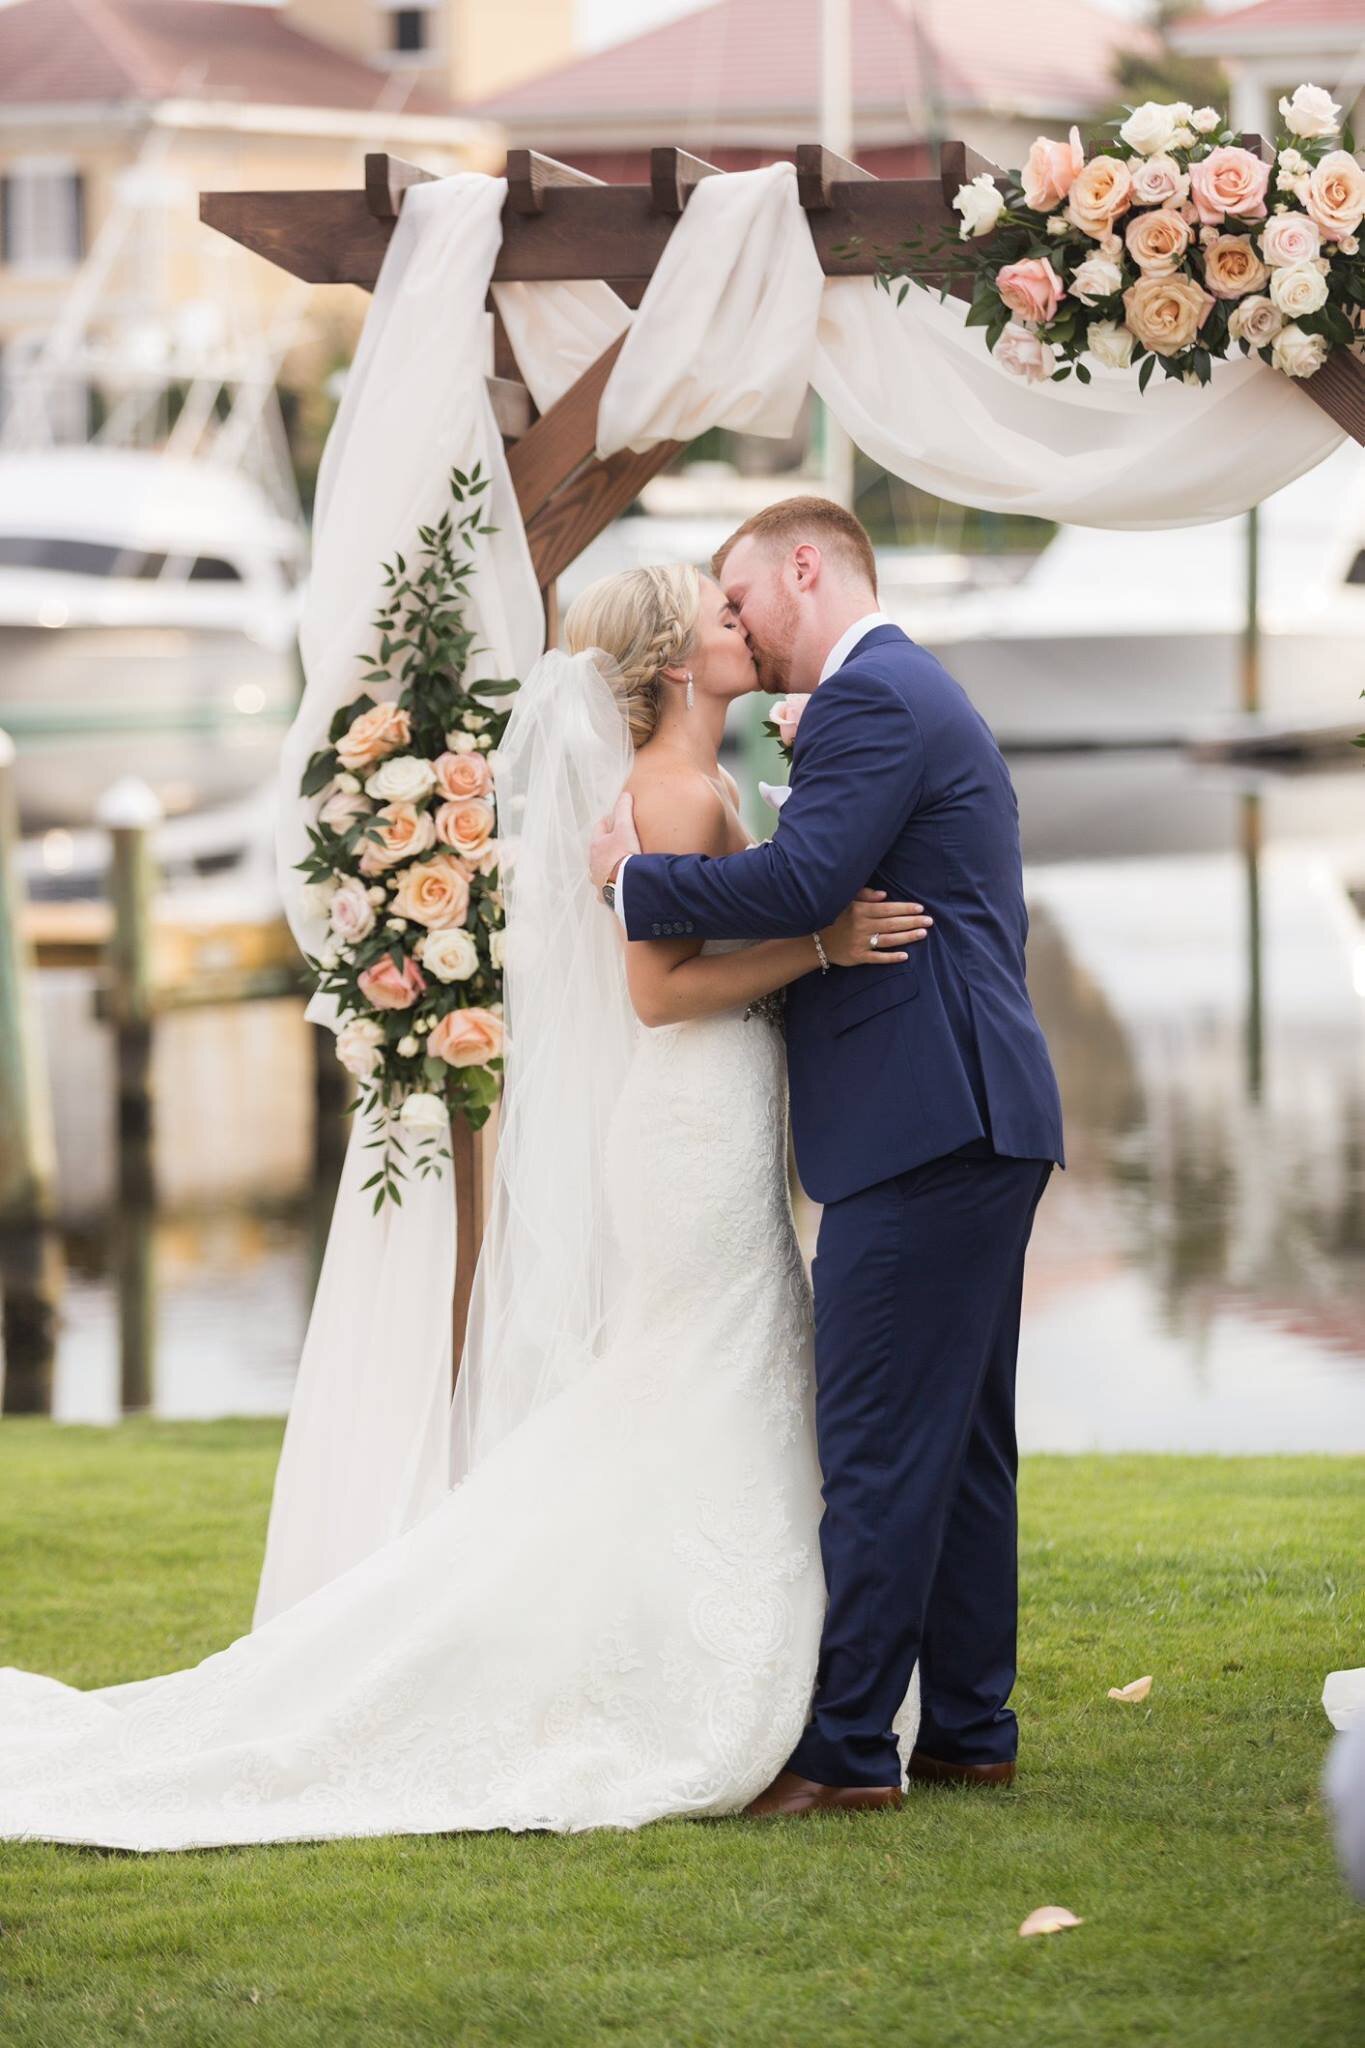 Venue Couple First Kiss at Pensacola at Venue Palafox Wharf Waterfront Wedding Venue